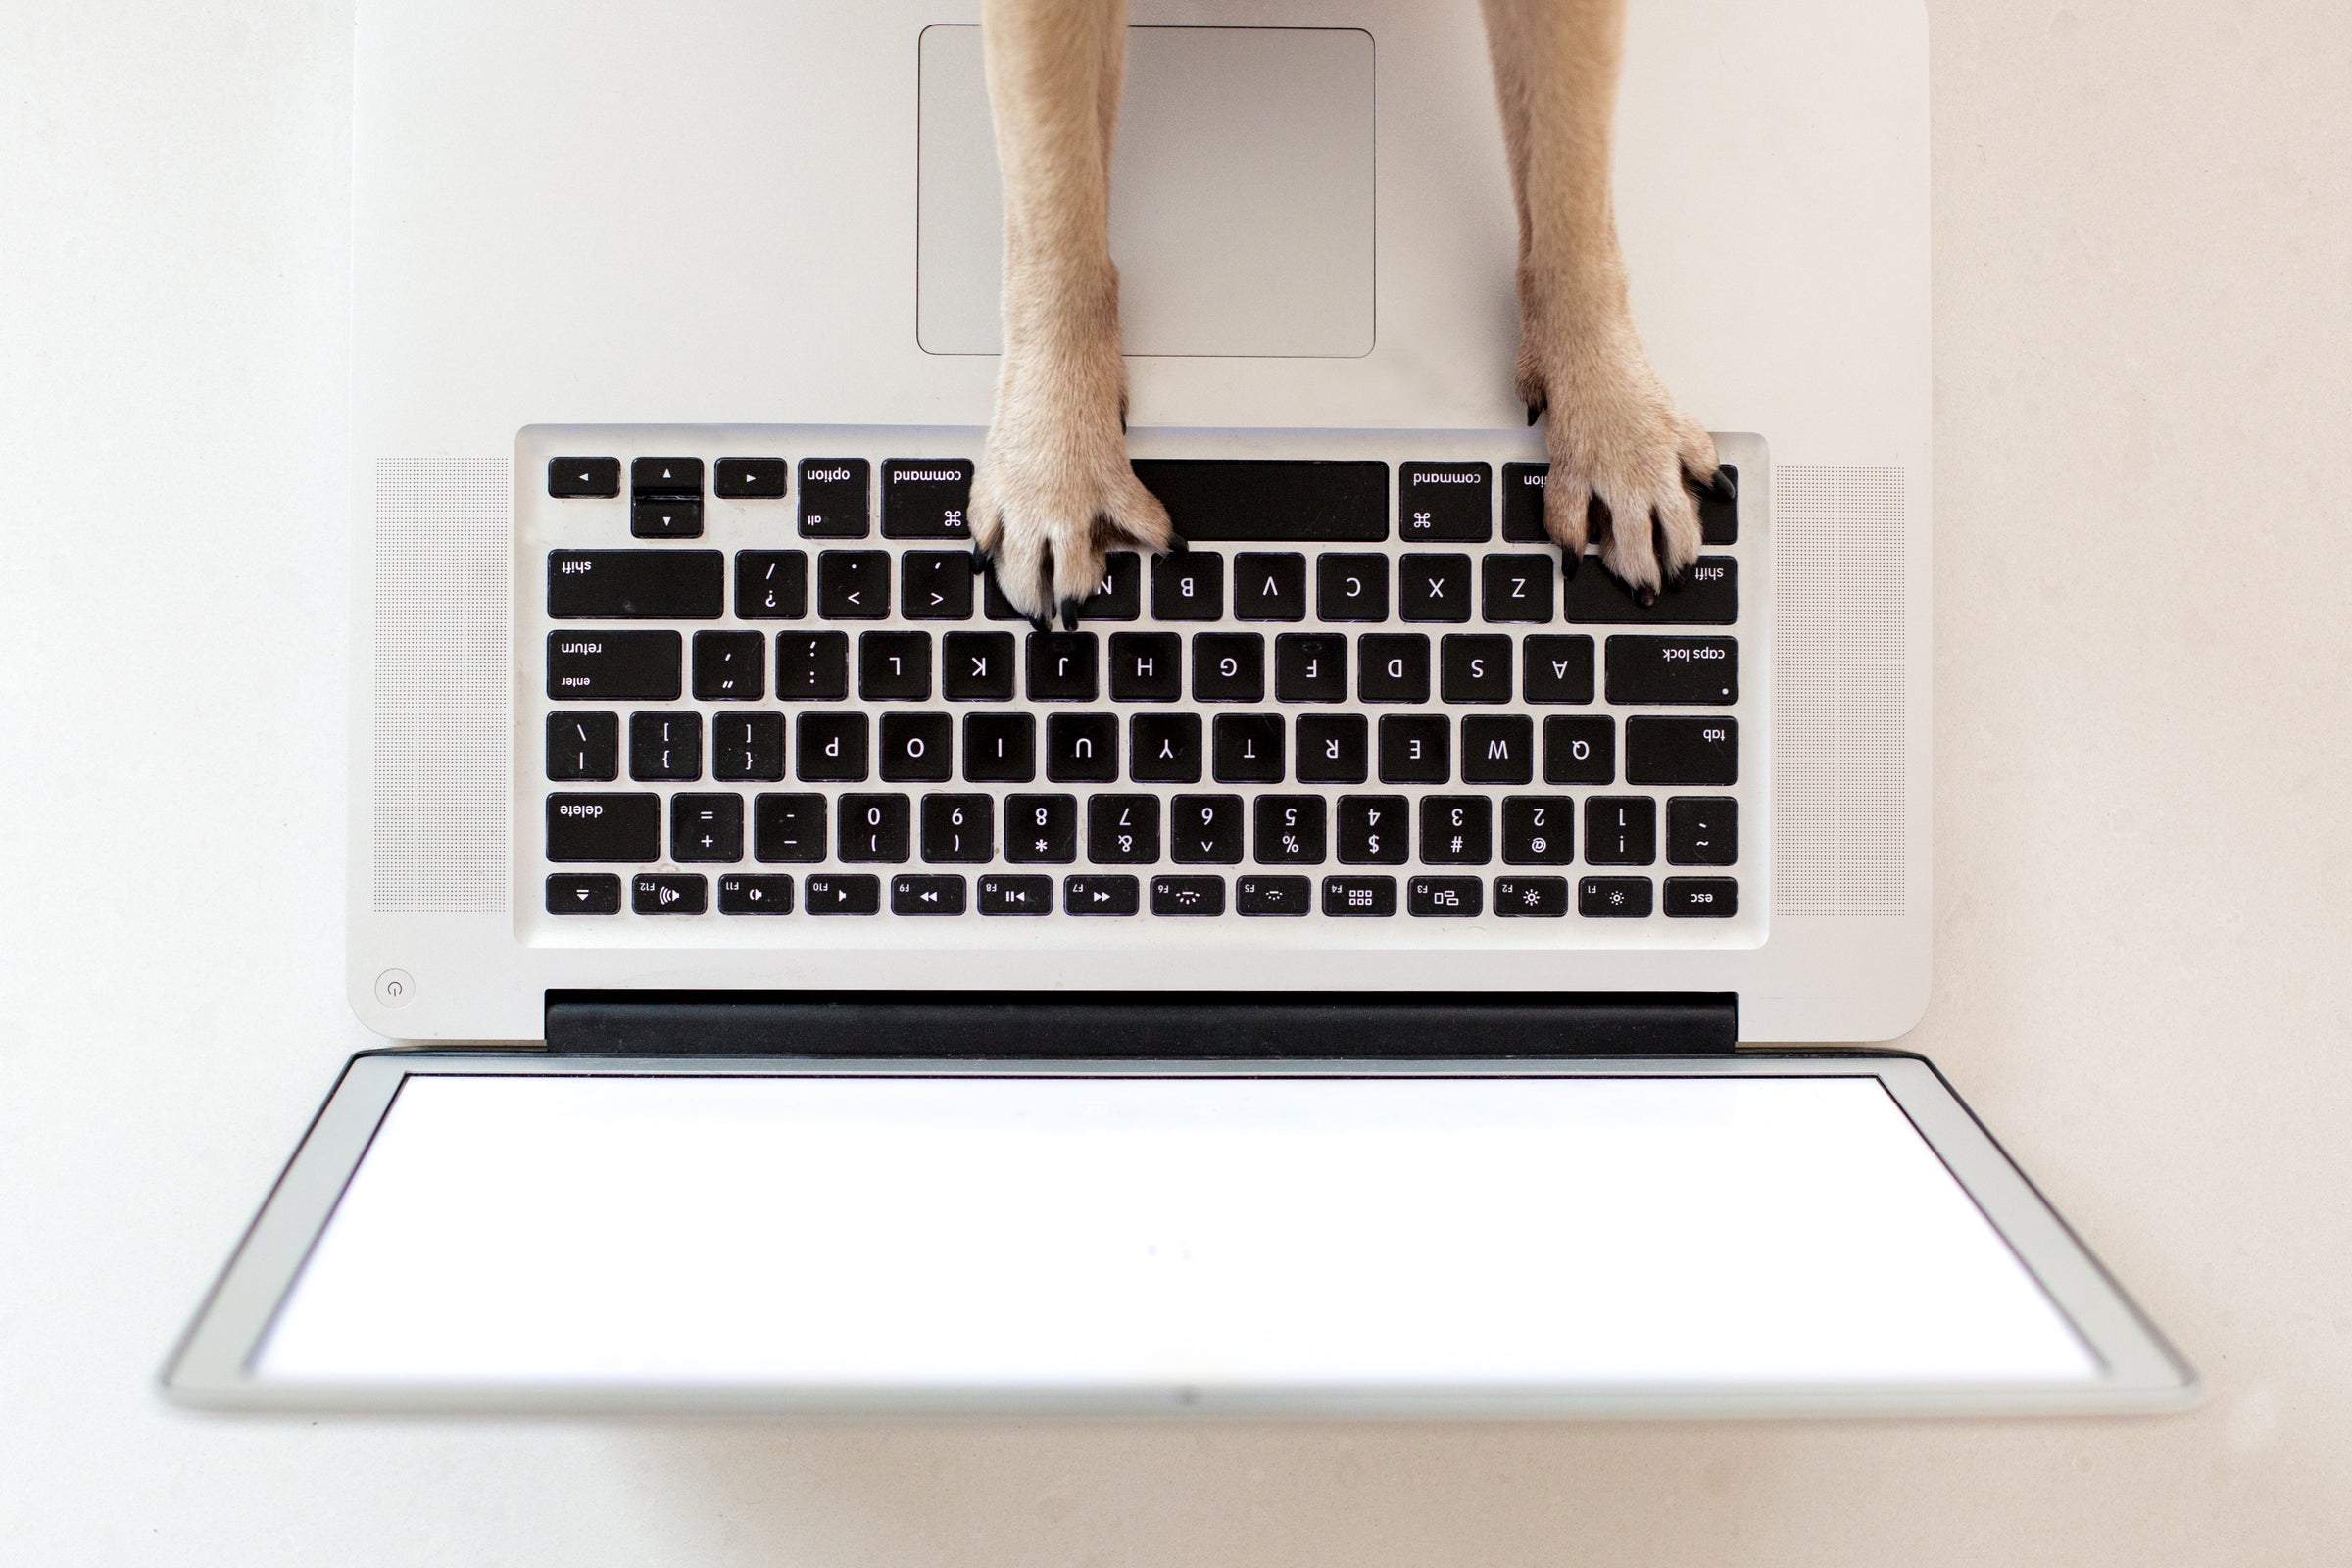 dog using laptop